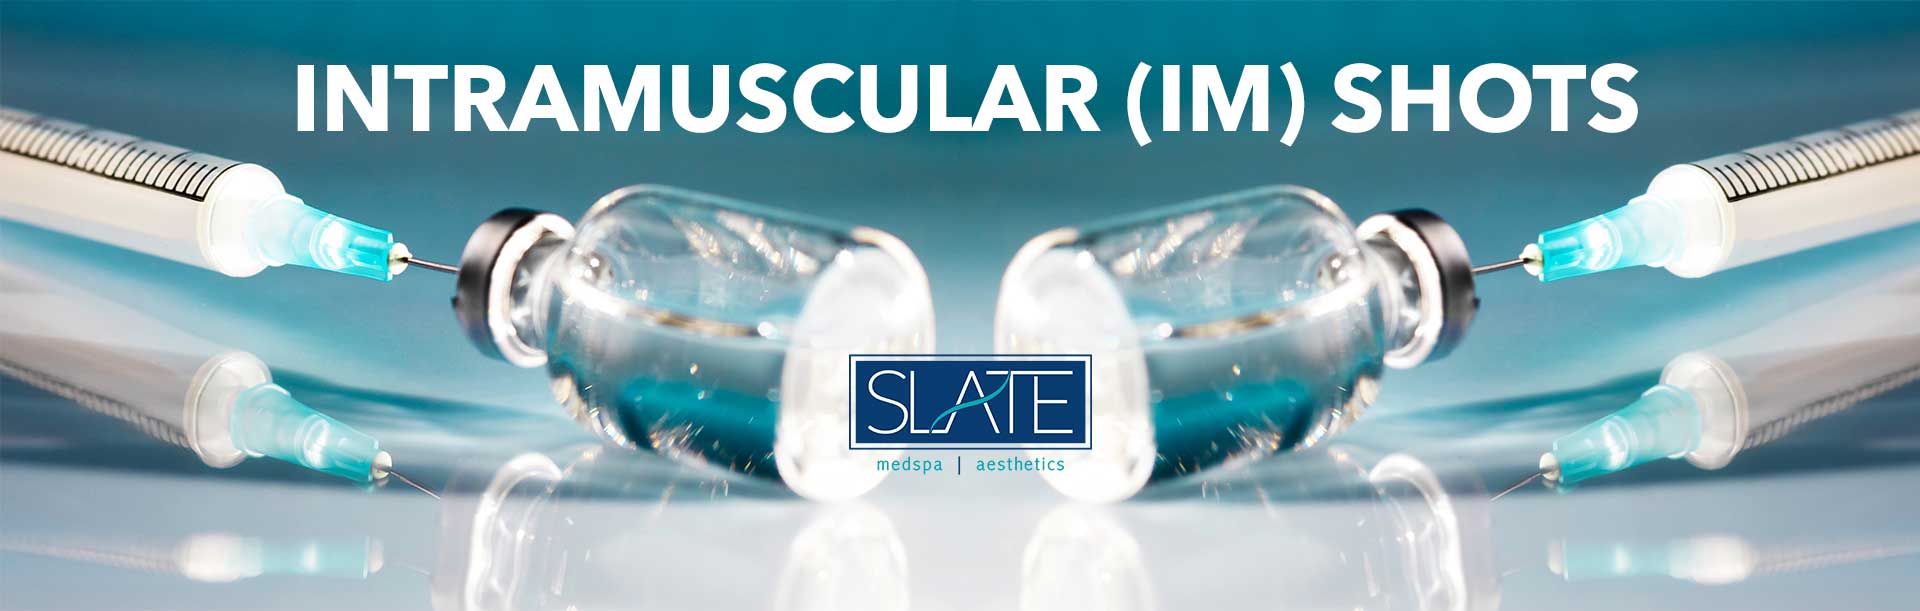 intramuscular-im-shots-banner